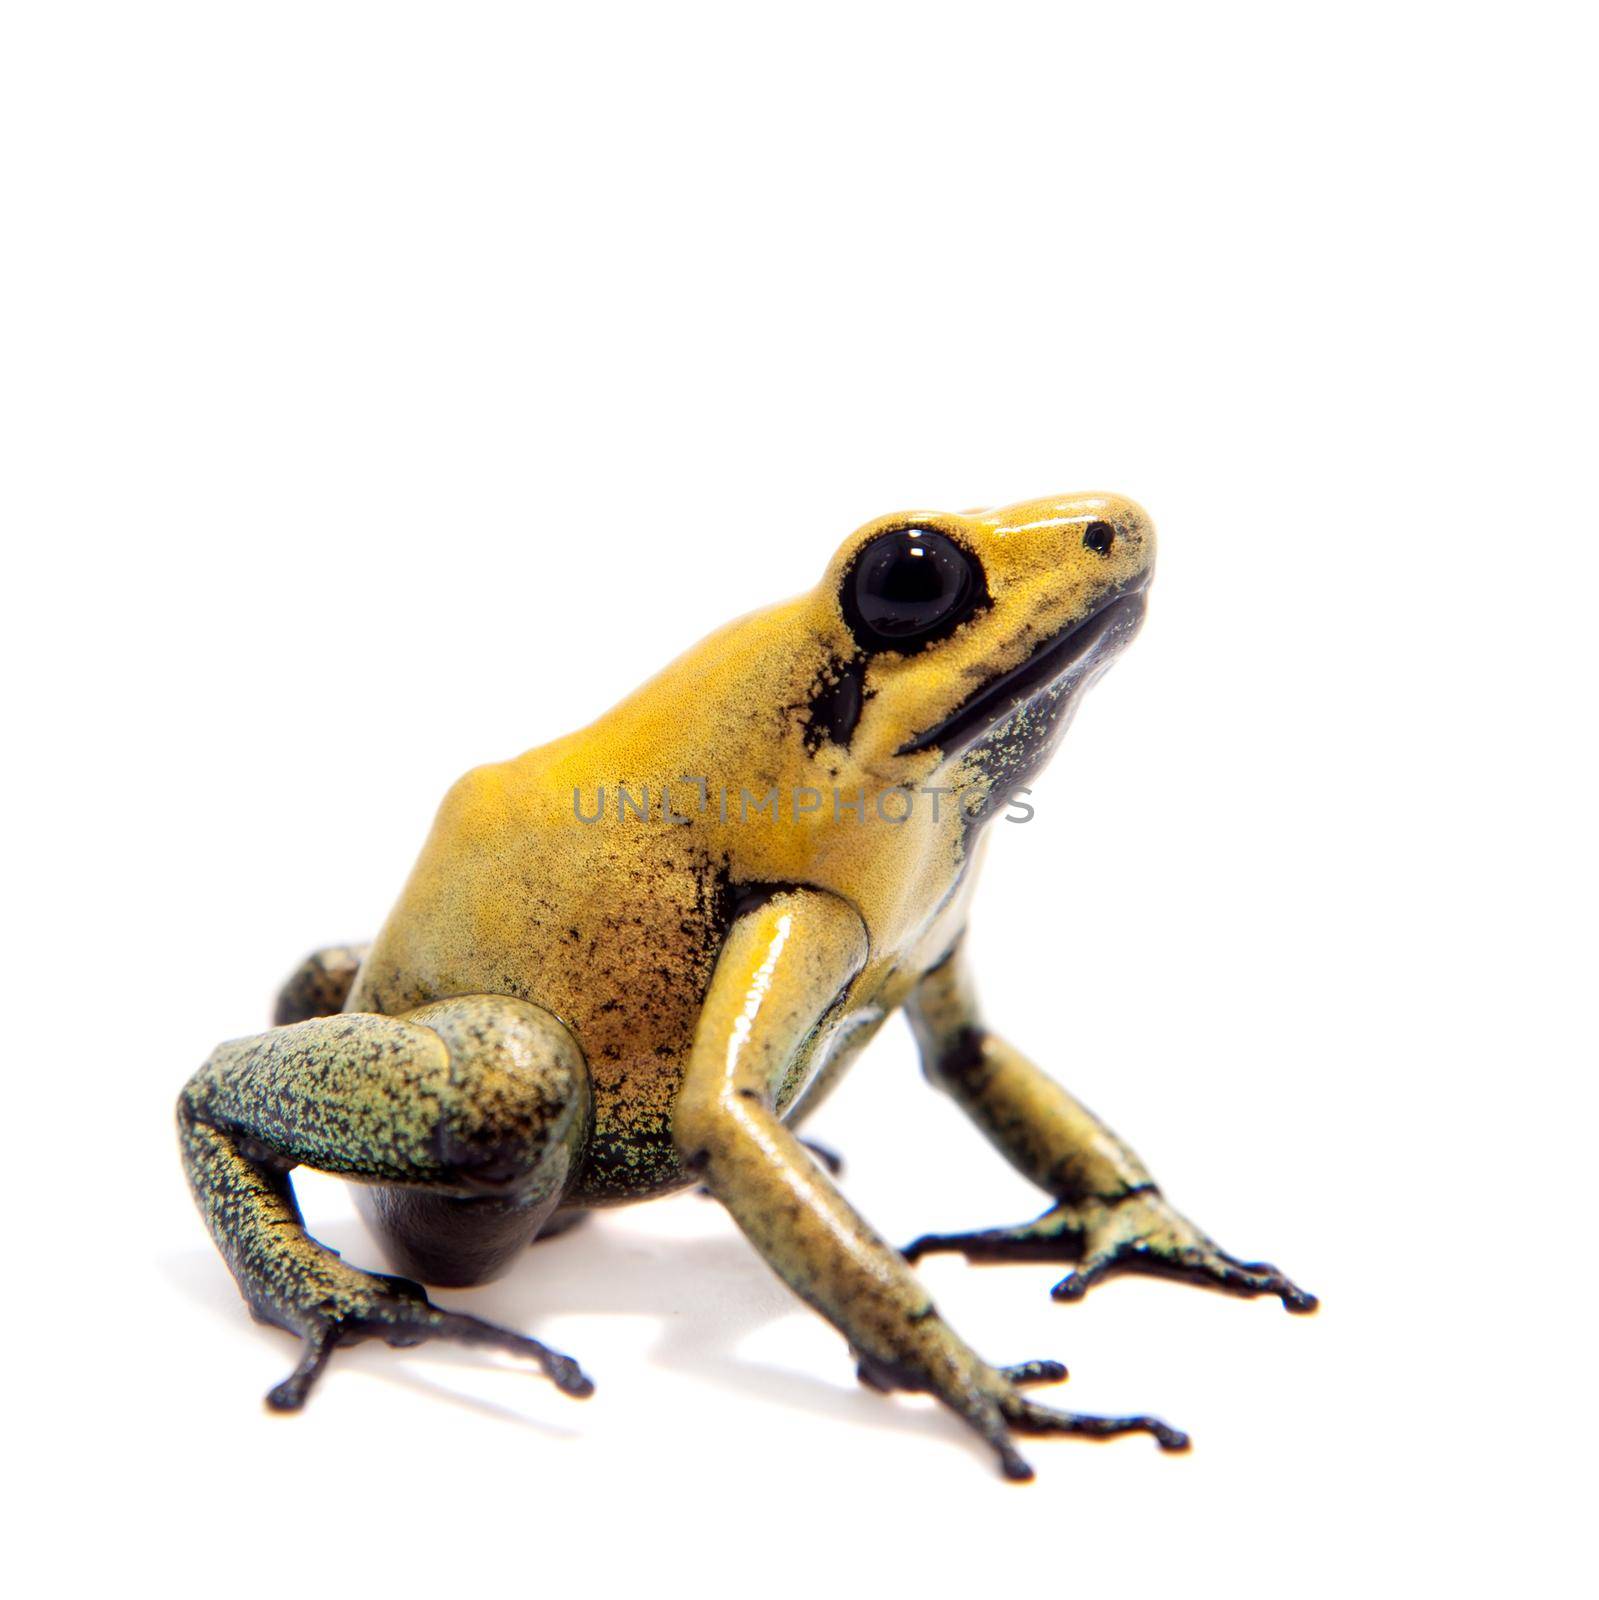 Black-legged poison frog, Phyllobates bicolor, on white, on white background.